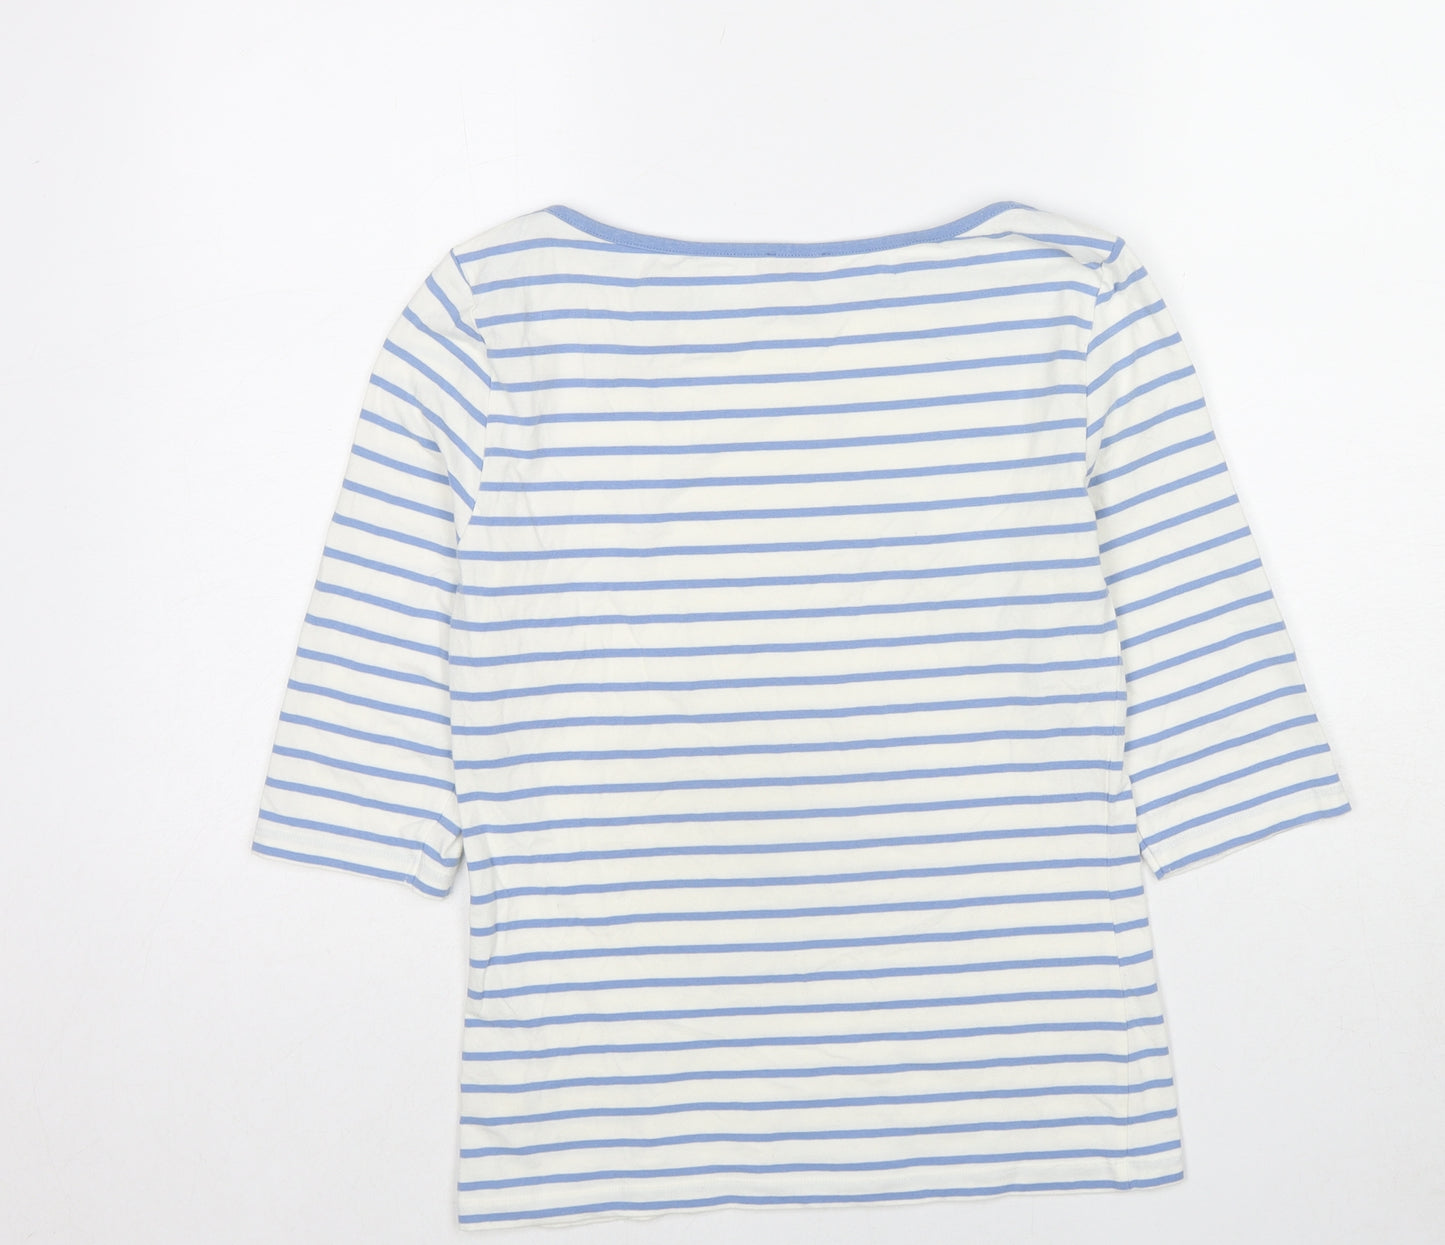 Phase Eight Womens White Striped Cotton Basic T-Shirt Size 12 Boat Neck